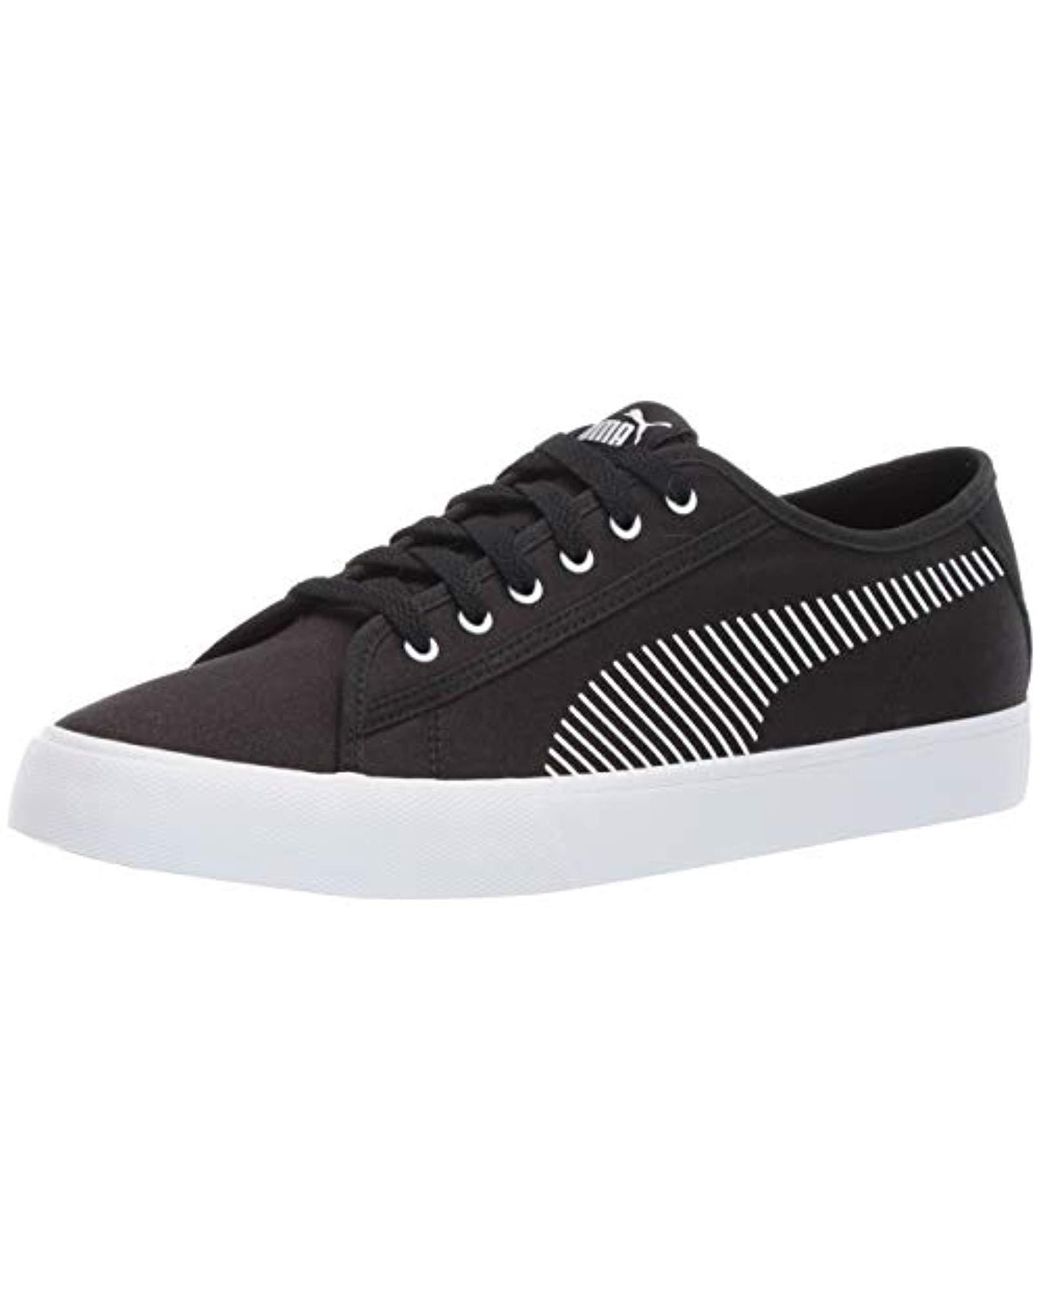 PUMA Bari Sneaker in Black/White (Black) for Men - Save 37% - Lyst